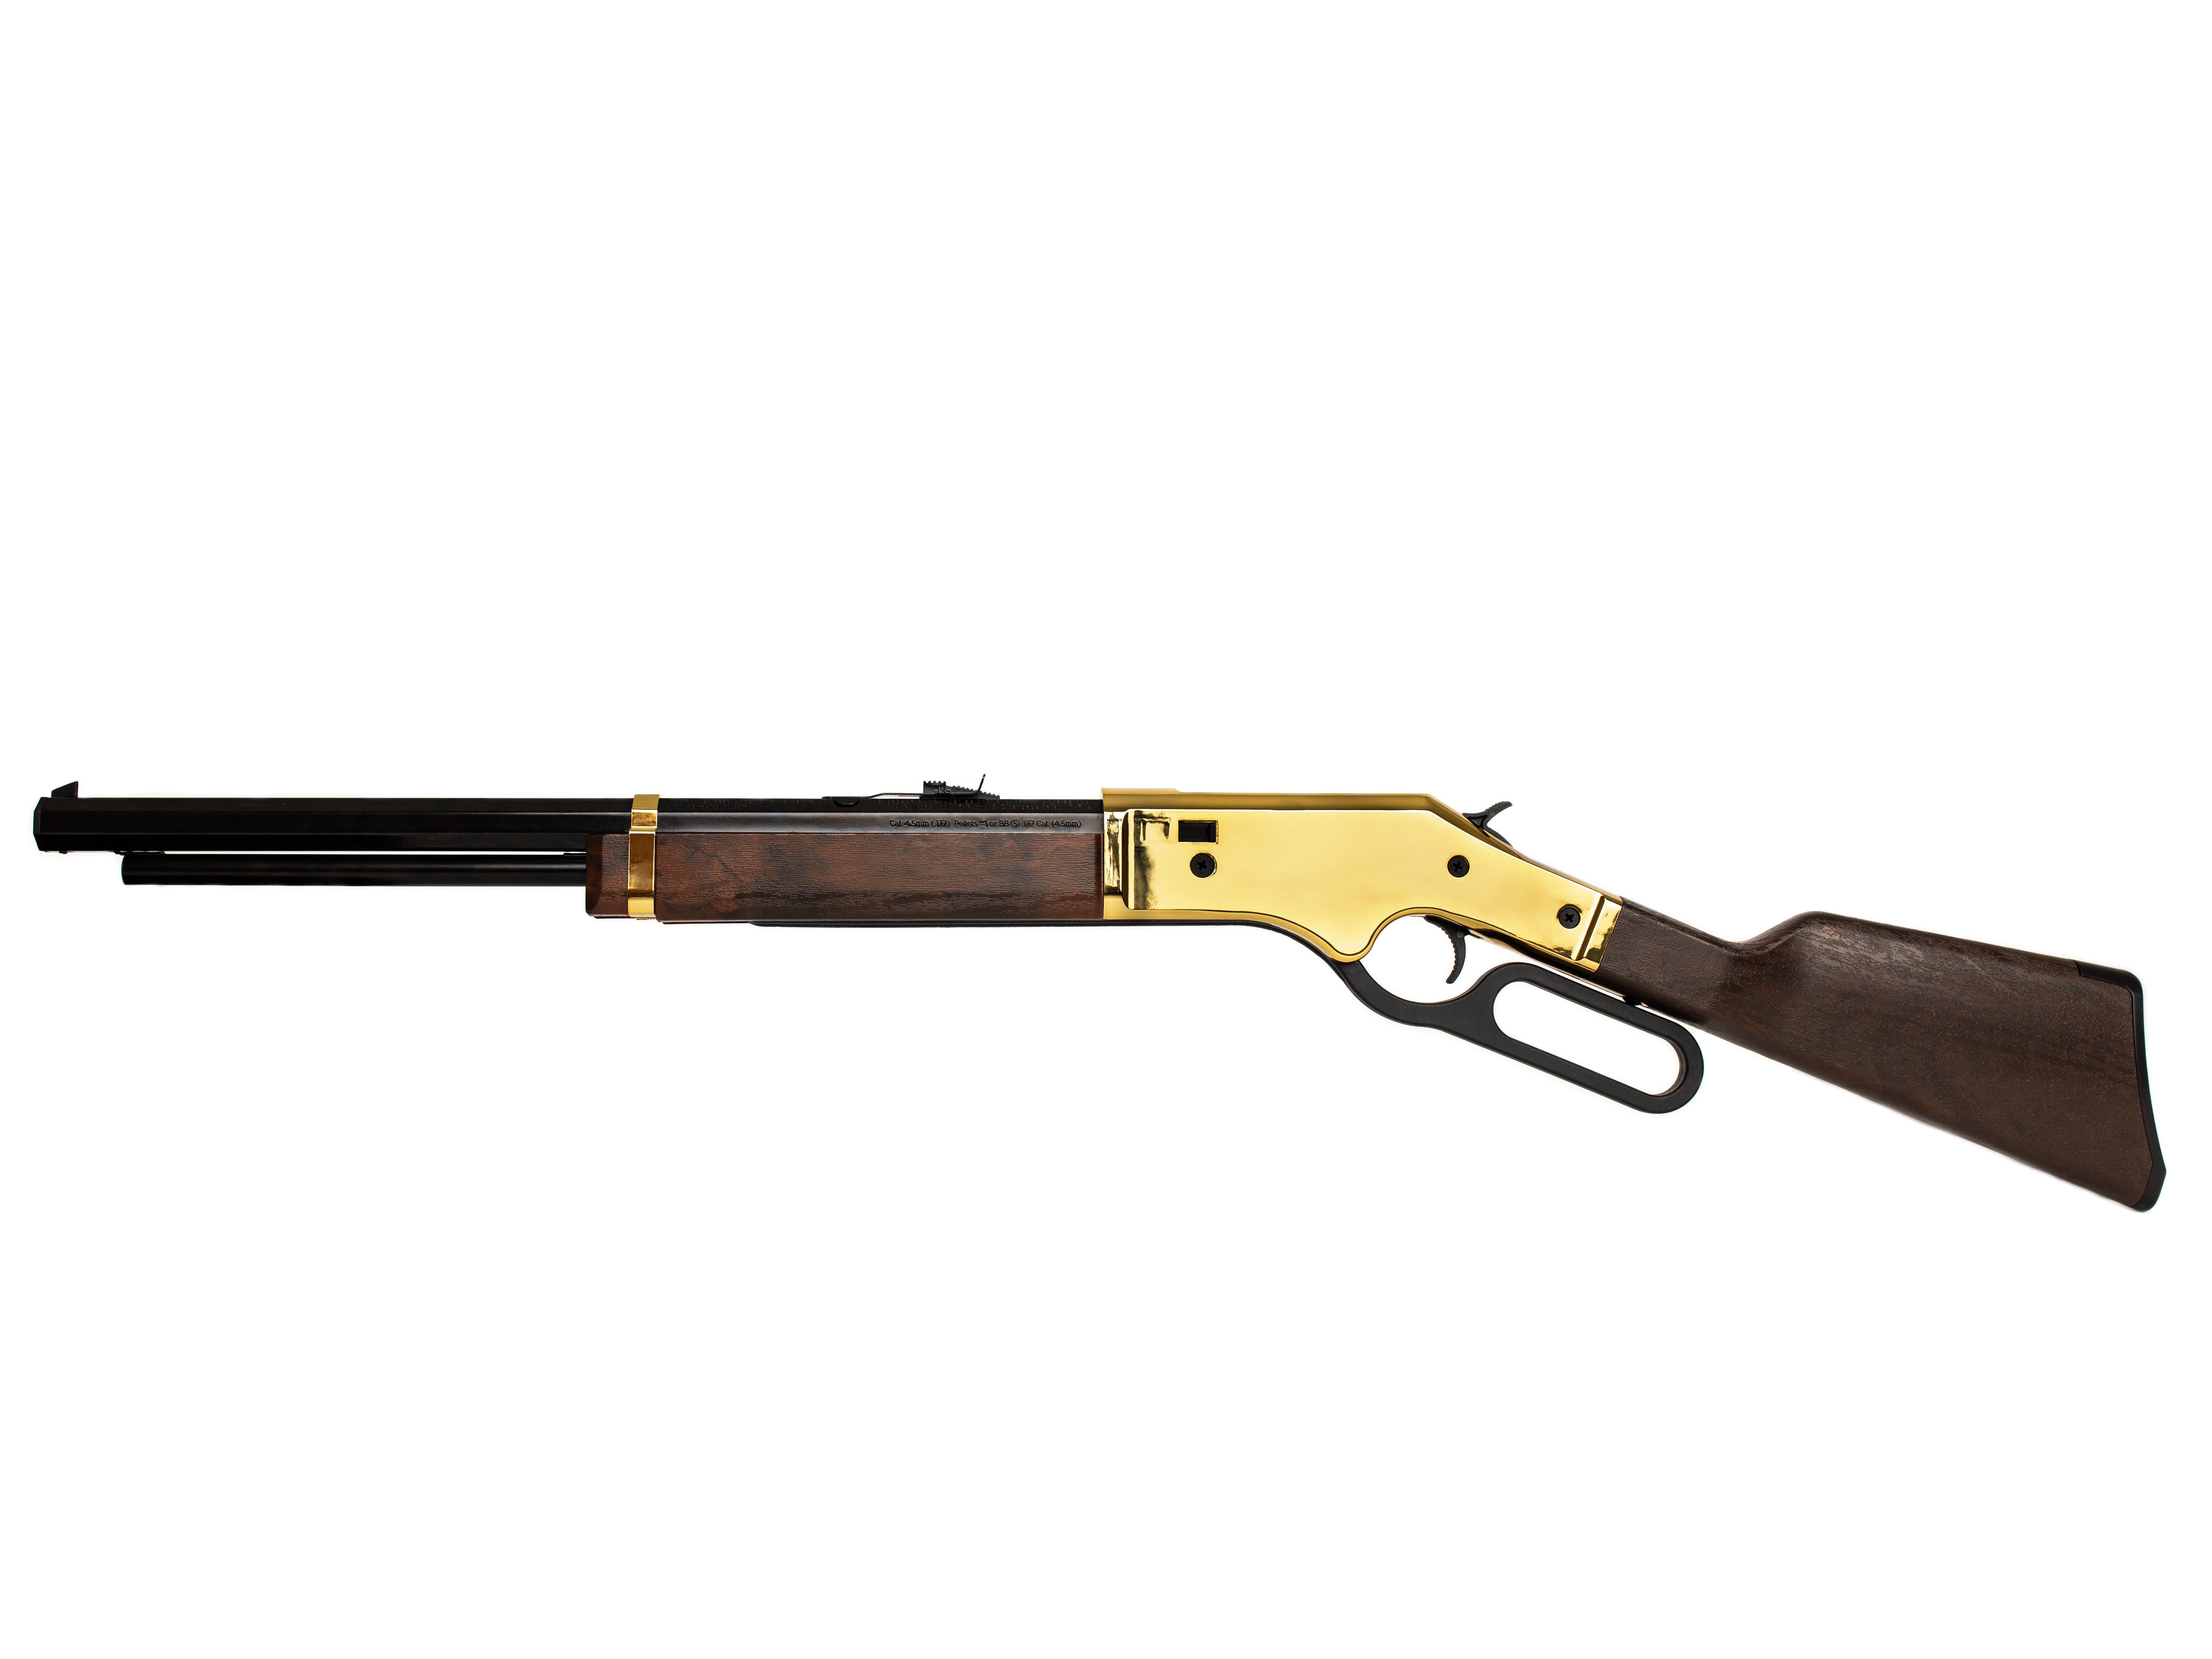  National Standard Products Air Pellet Rifle Gun (5.5 Wood  Stock/Pump Action) : Deportes y Actividades al Aire Libre